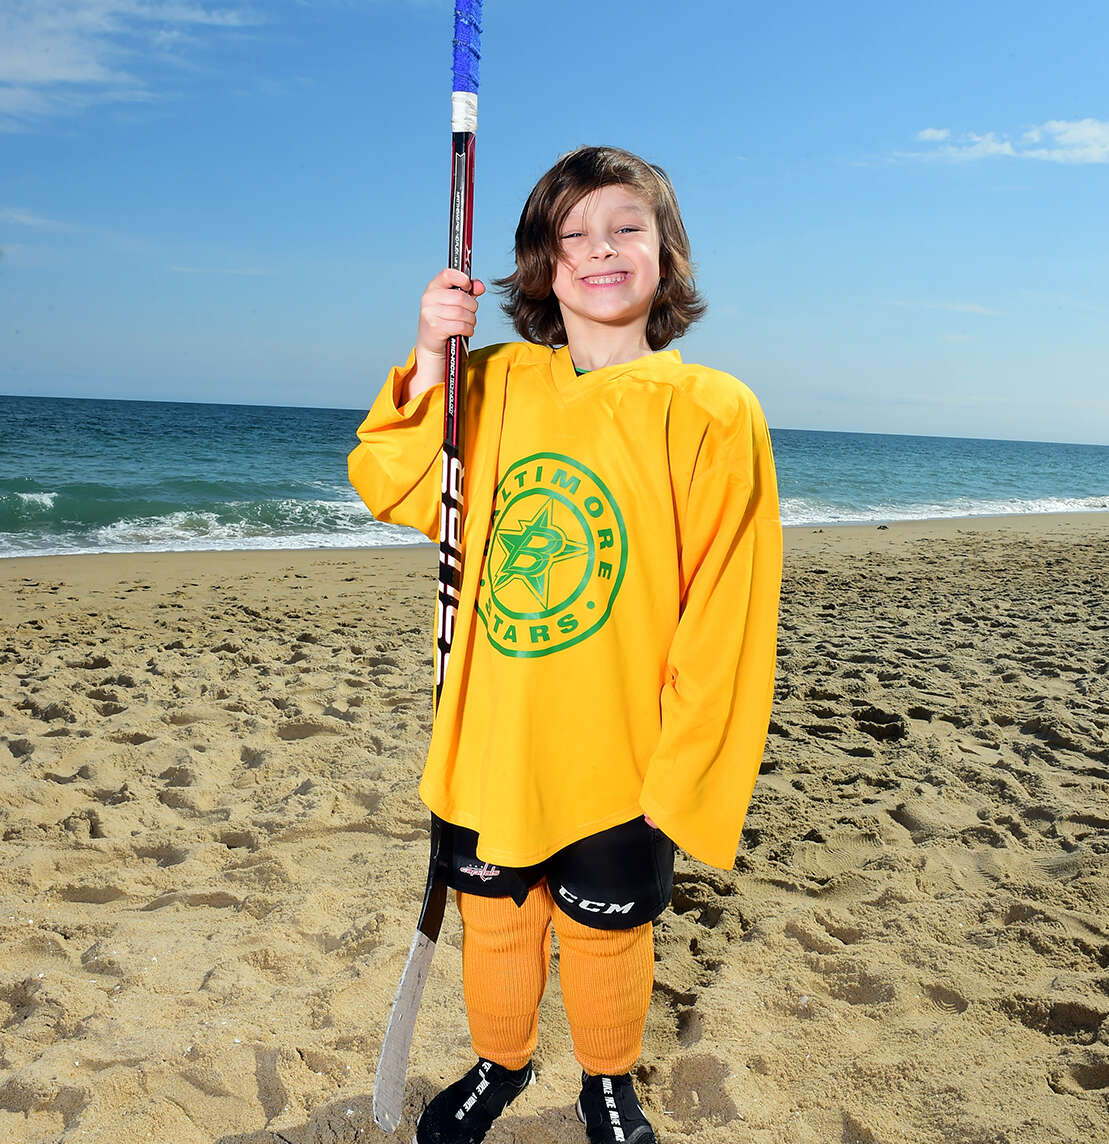 Child hockey player posing on the beach